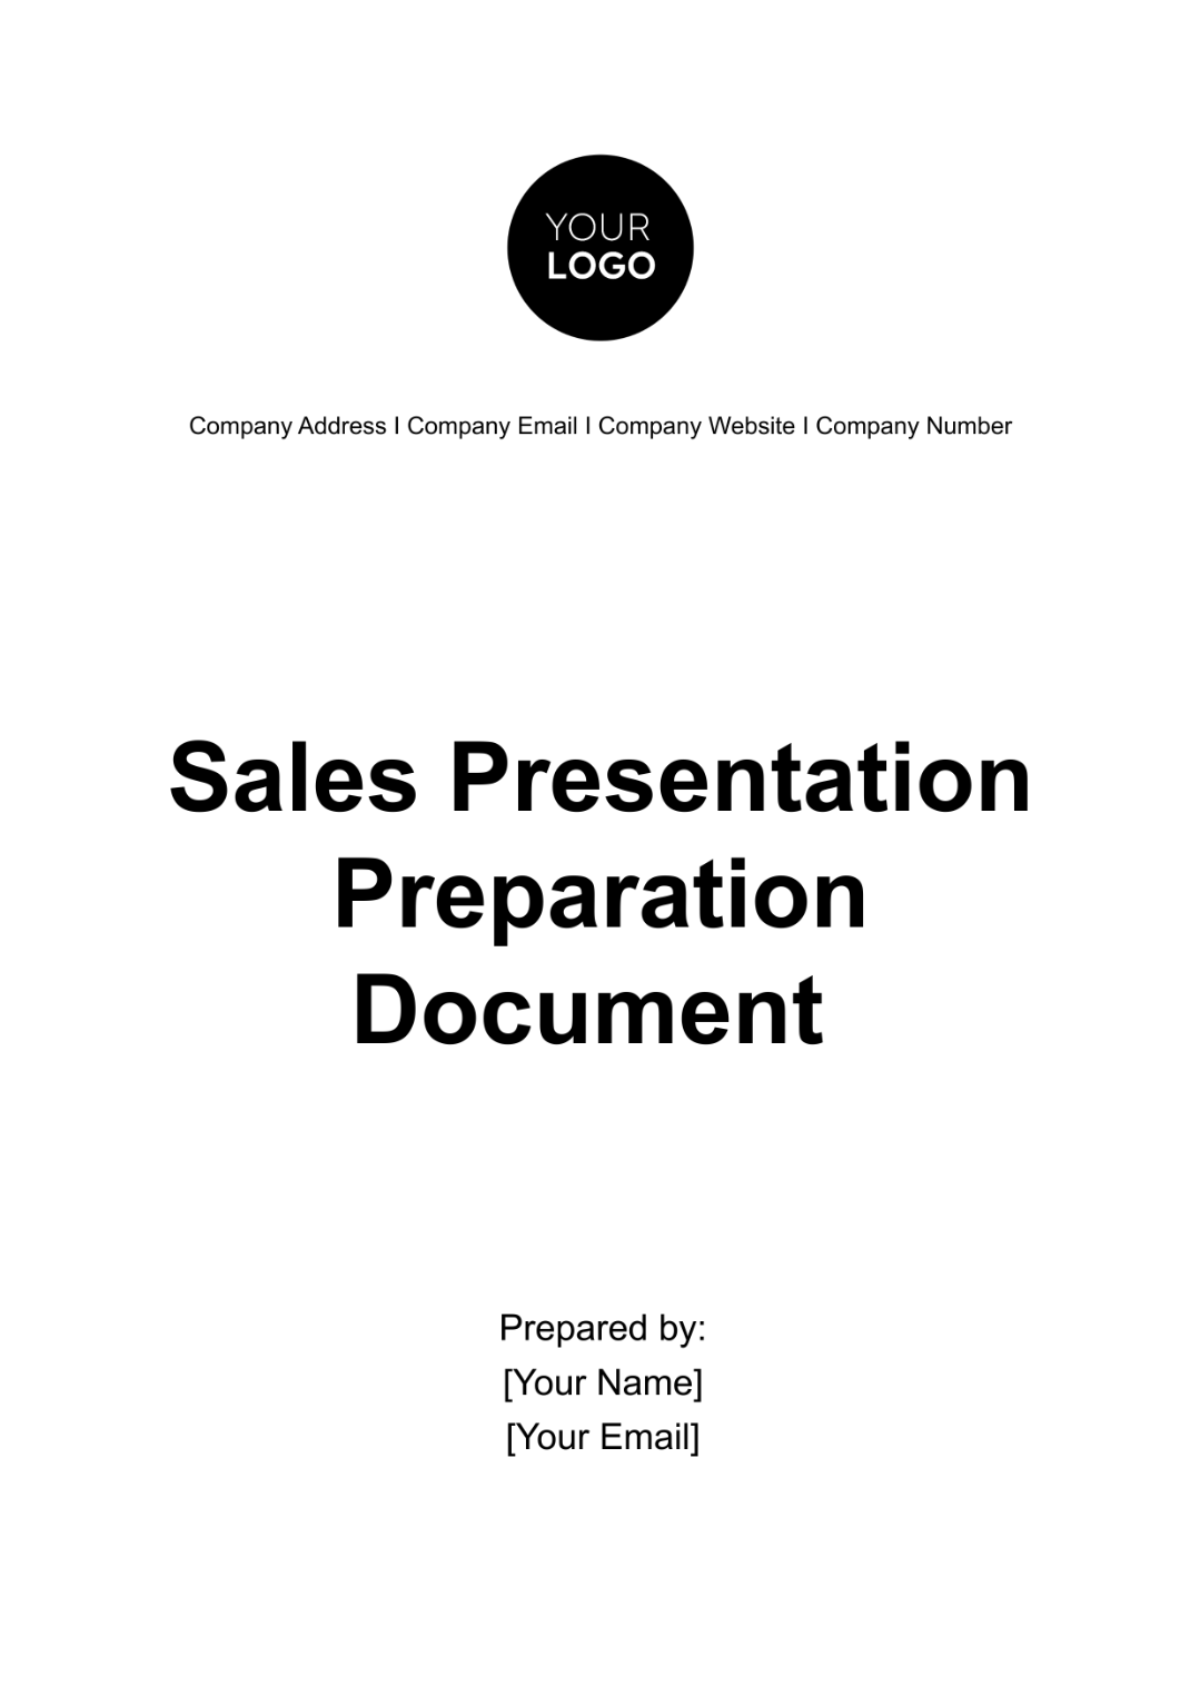 Free Sales Presentation Preparation Document Template